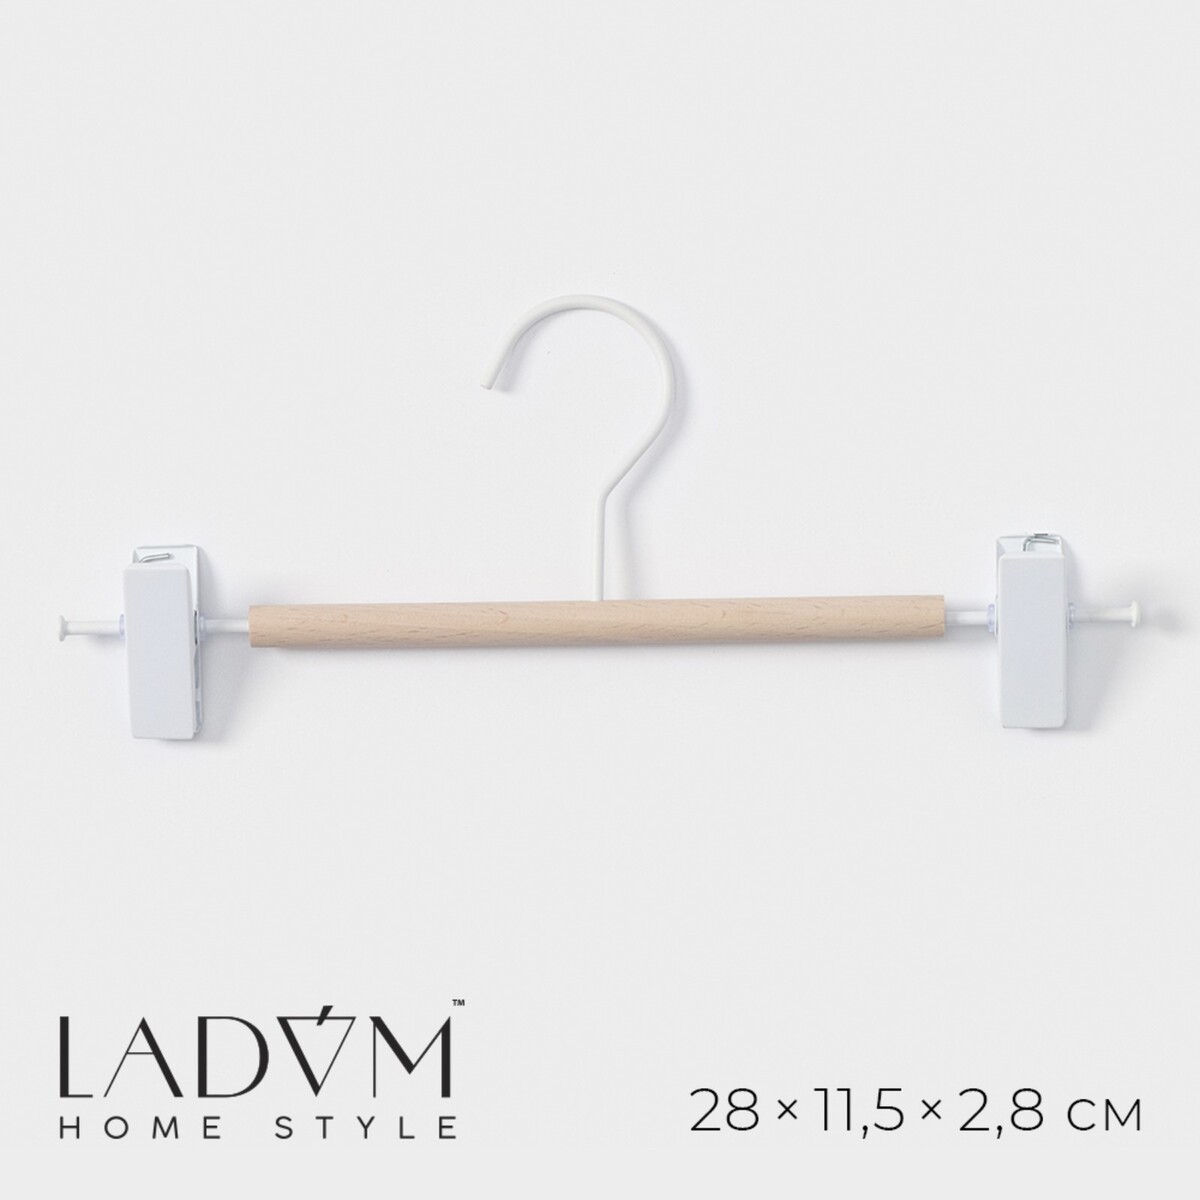 Вешалка для брюк и юбок ladо́m laconique, 28×11,5×2,8 см, цвет белый вешалка для брюк и юбок ladо́m laconique 28×11 5×2 8 см белый